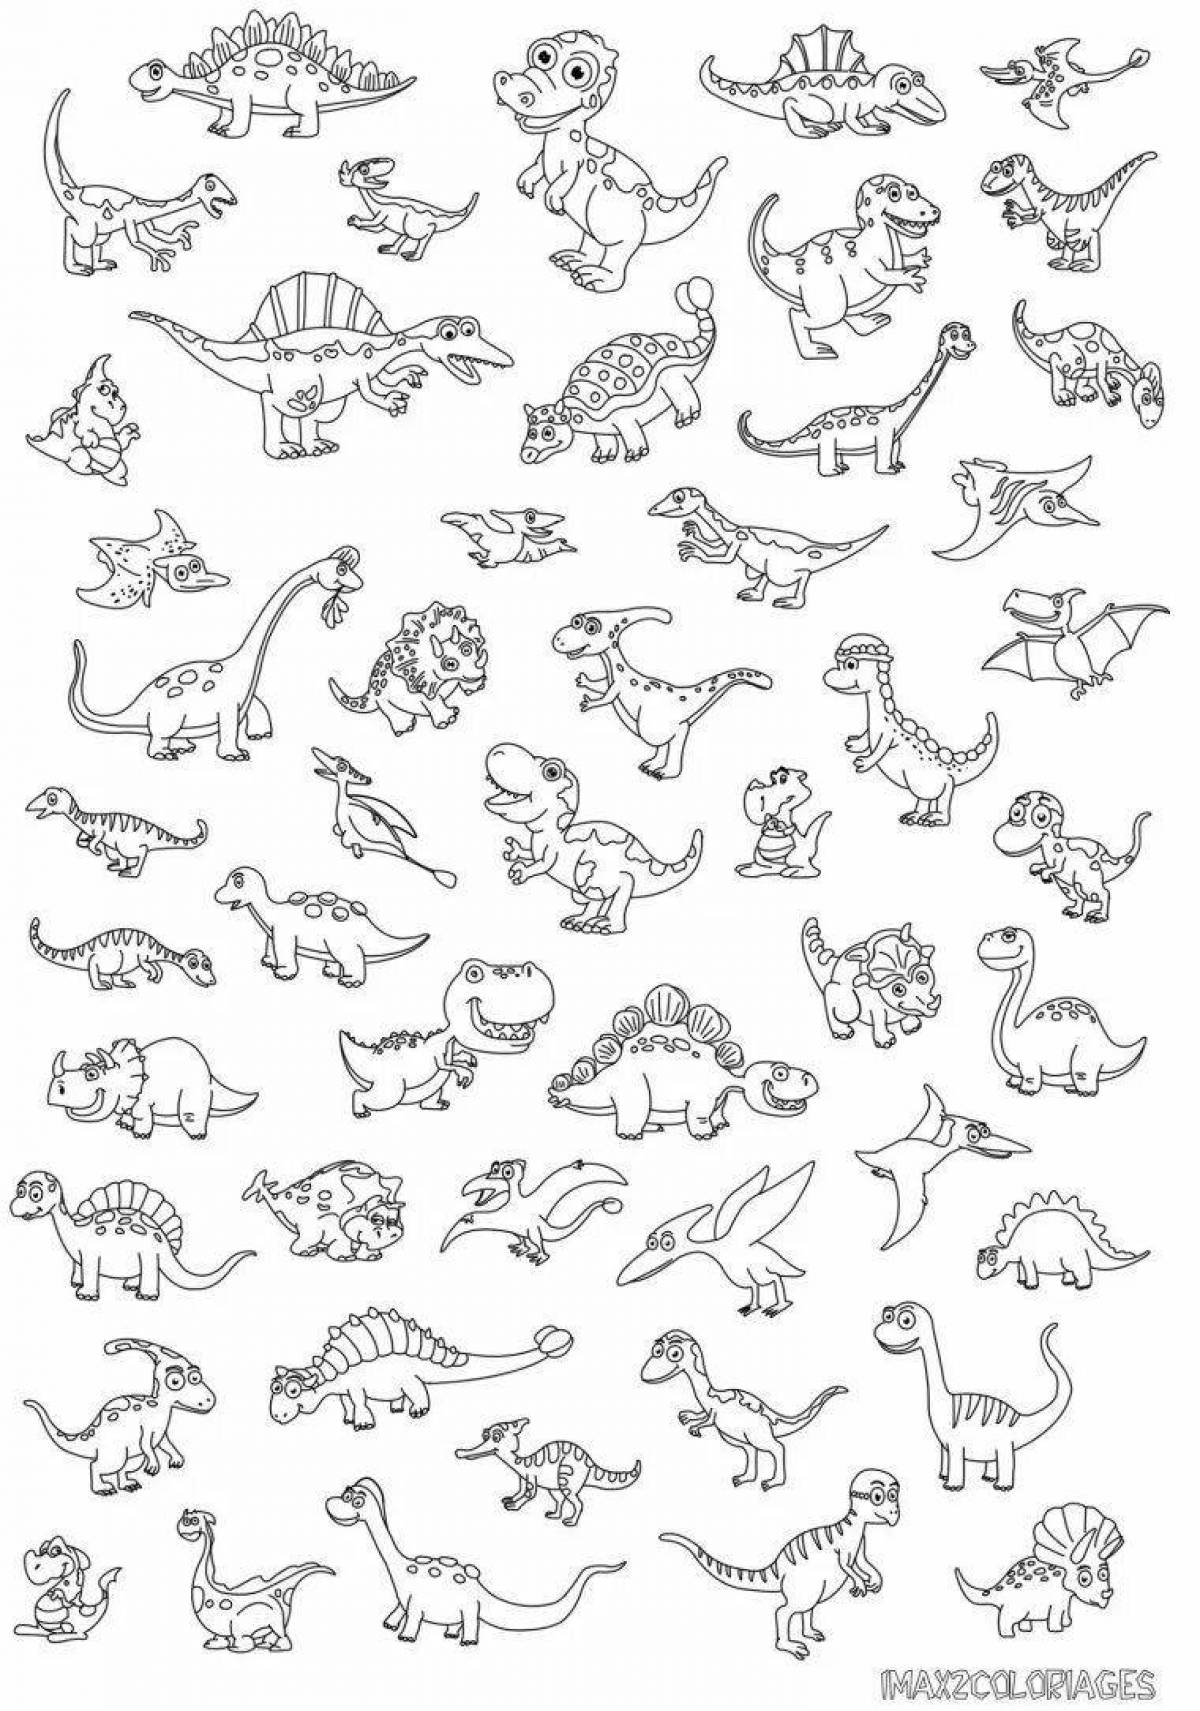 Dinosaurs lot #8